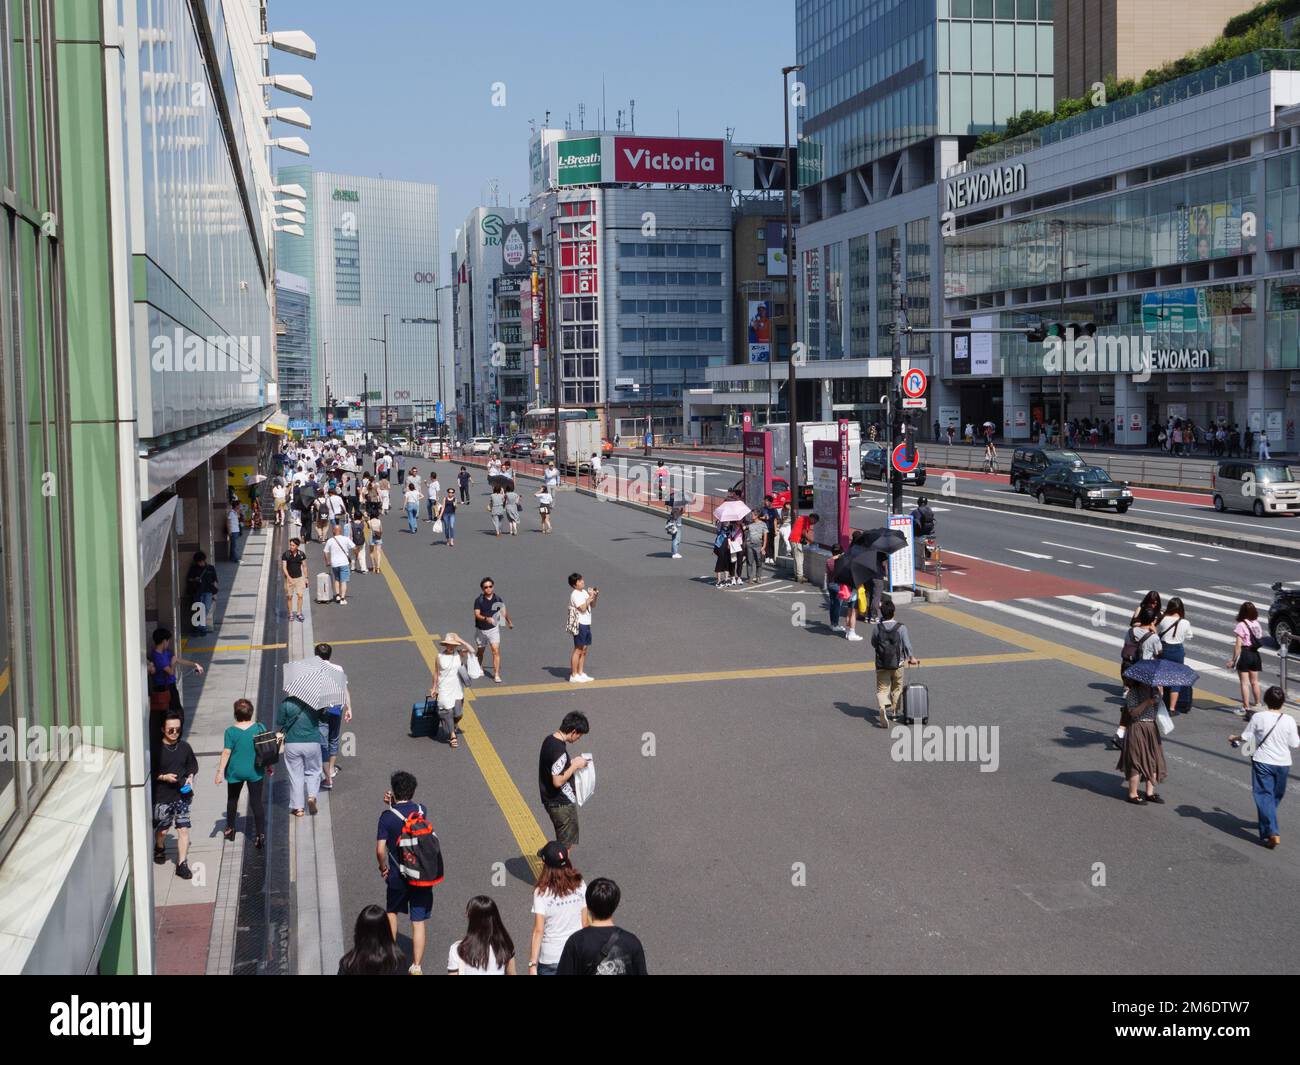 Shinjuku, Japan - 30 8 19: The spacious area outside of the JR Shinjuku station during the day Stock Photo